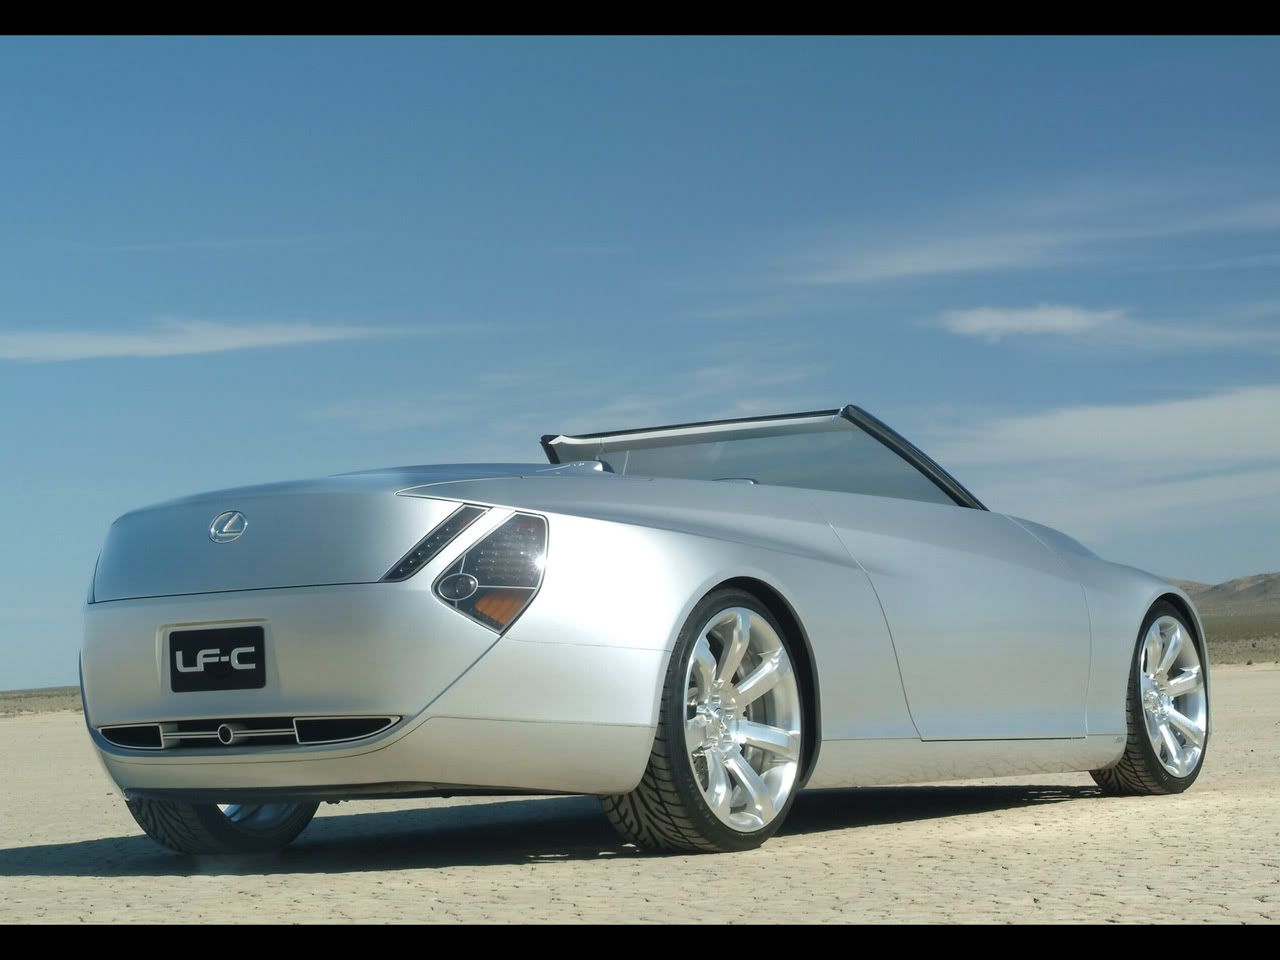 2004-Lexus-LF-C-Concept-RA-1280x960.jpg